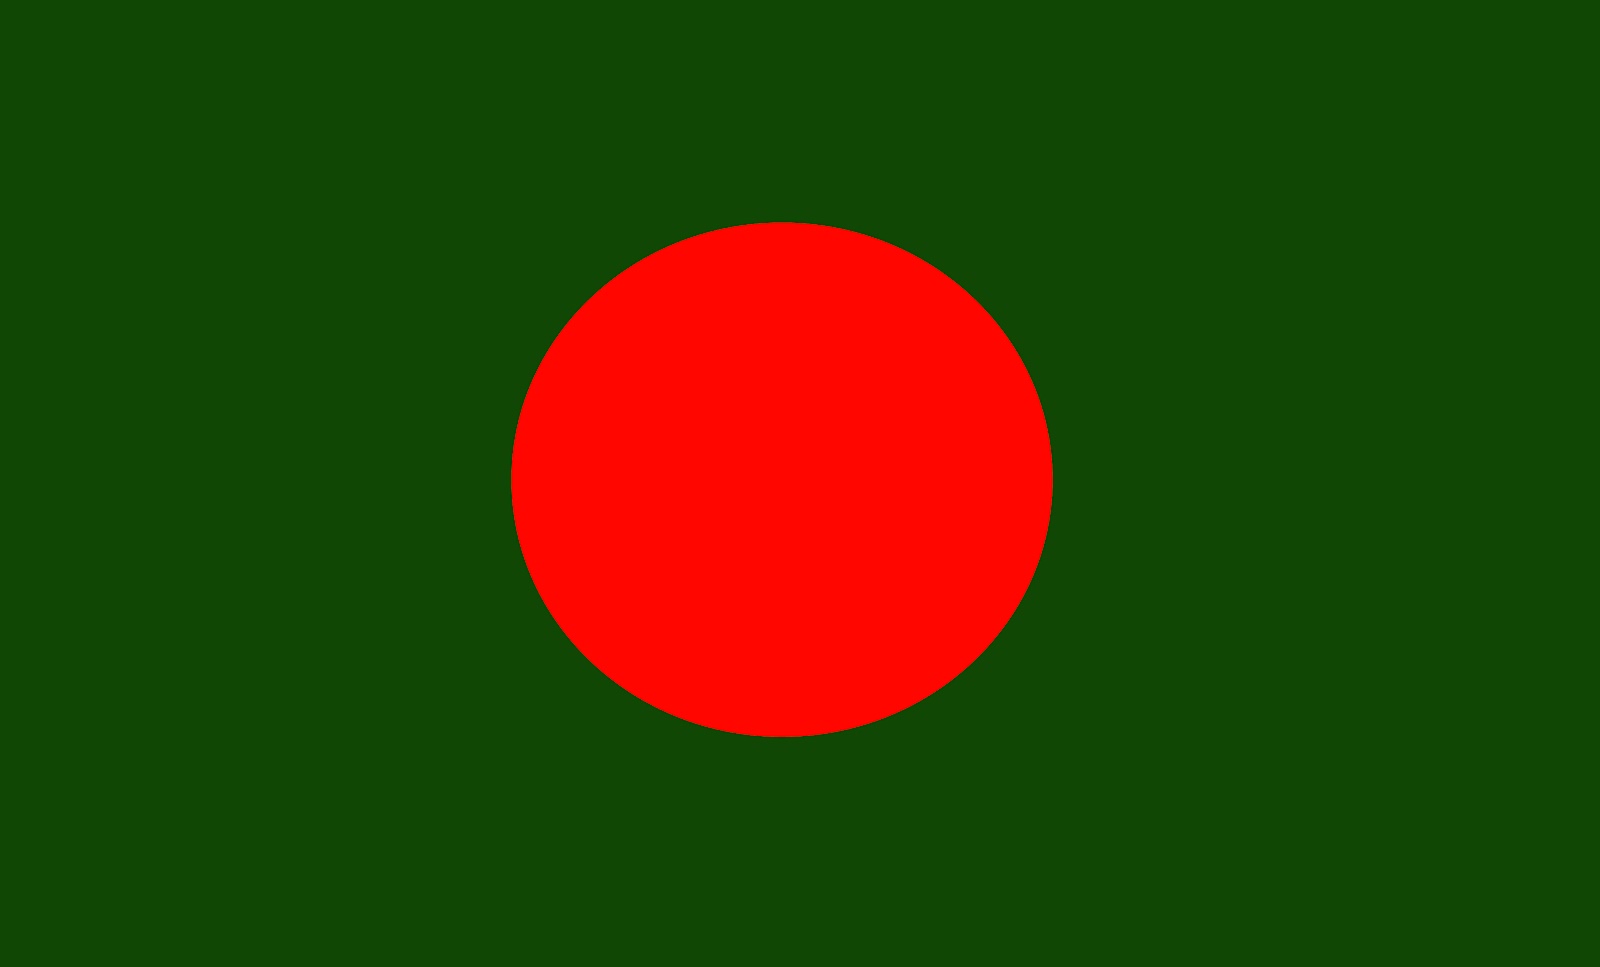 bangladesch flagge tapete hd,grün,rot,flagge,kreis,buntheit